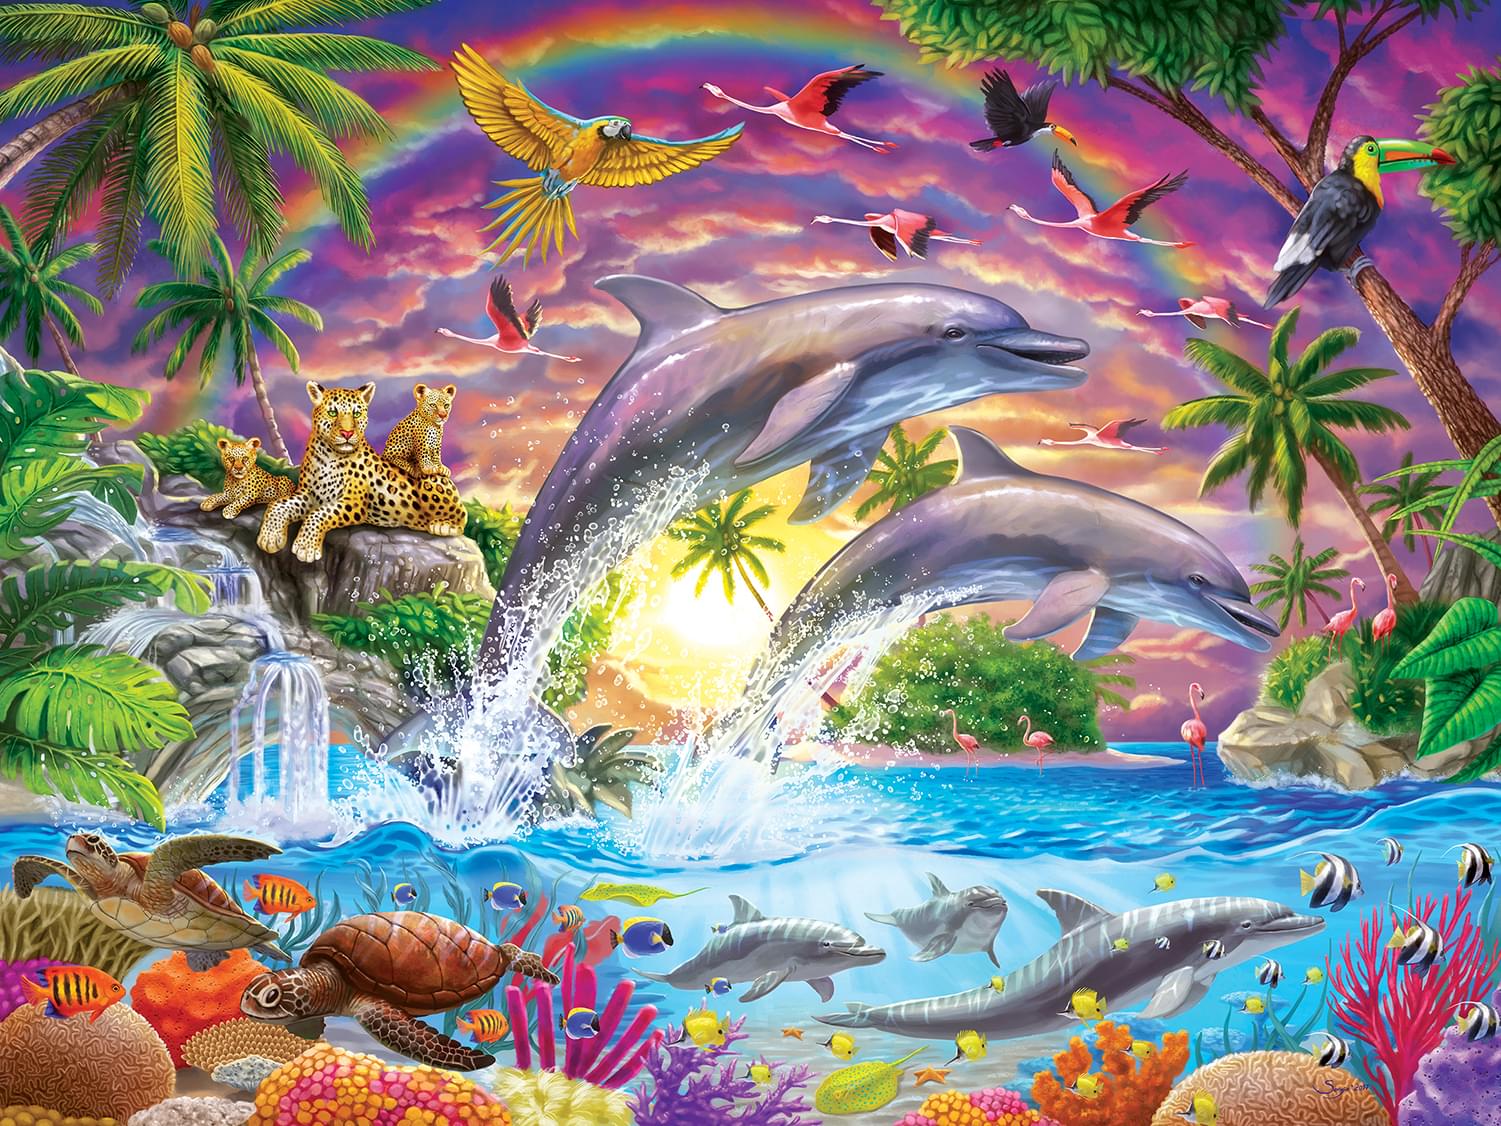 MasterPieces Inc Fantasy Isle Colorful Dolphins 300 Piece Large EZ Grip  Jigsaw Puzzle